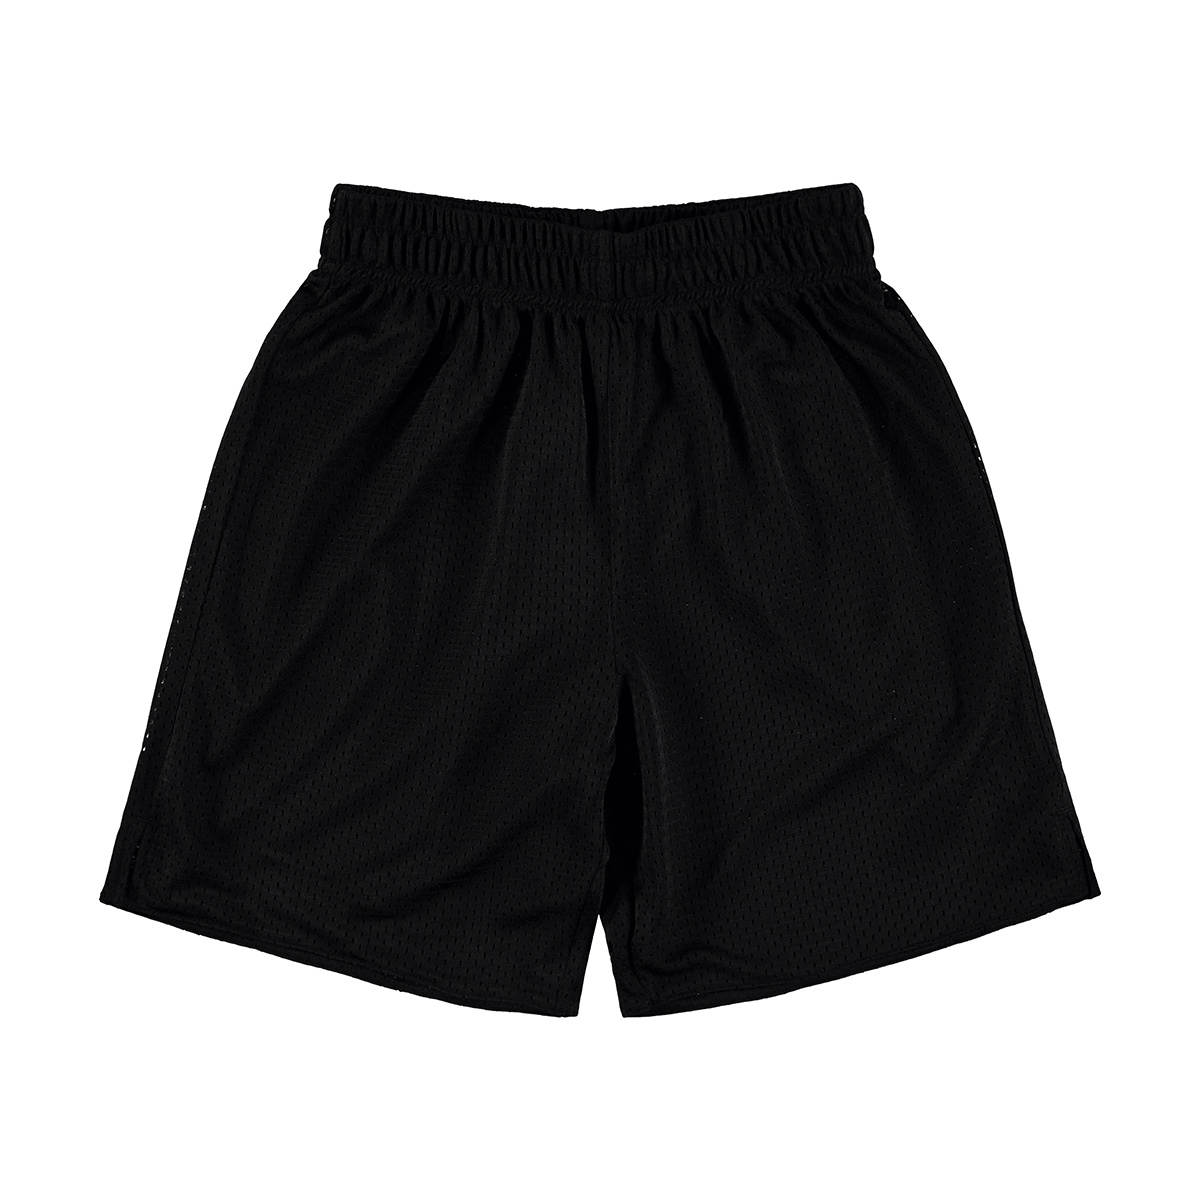 Tricot Basketball Shorts | Kmart